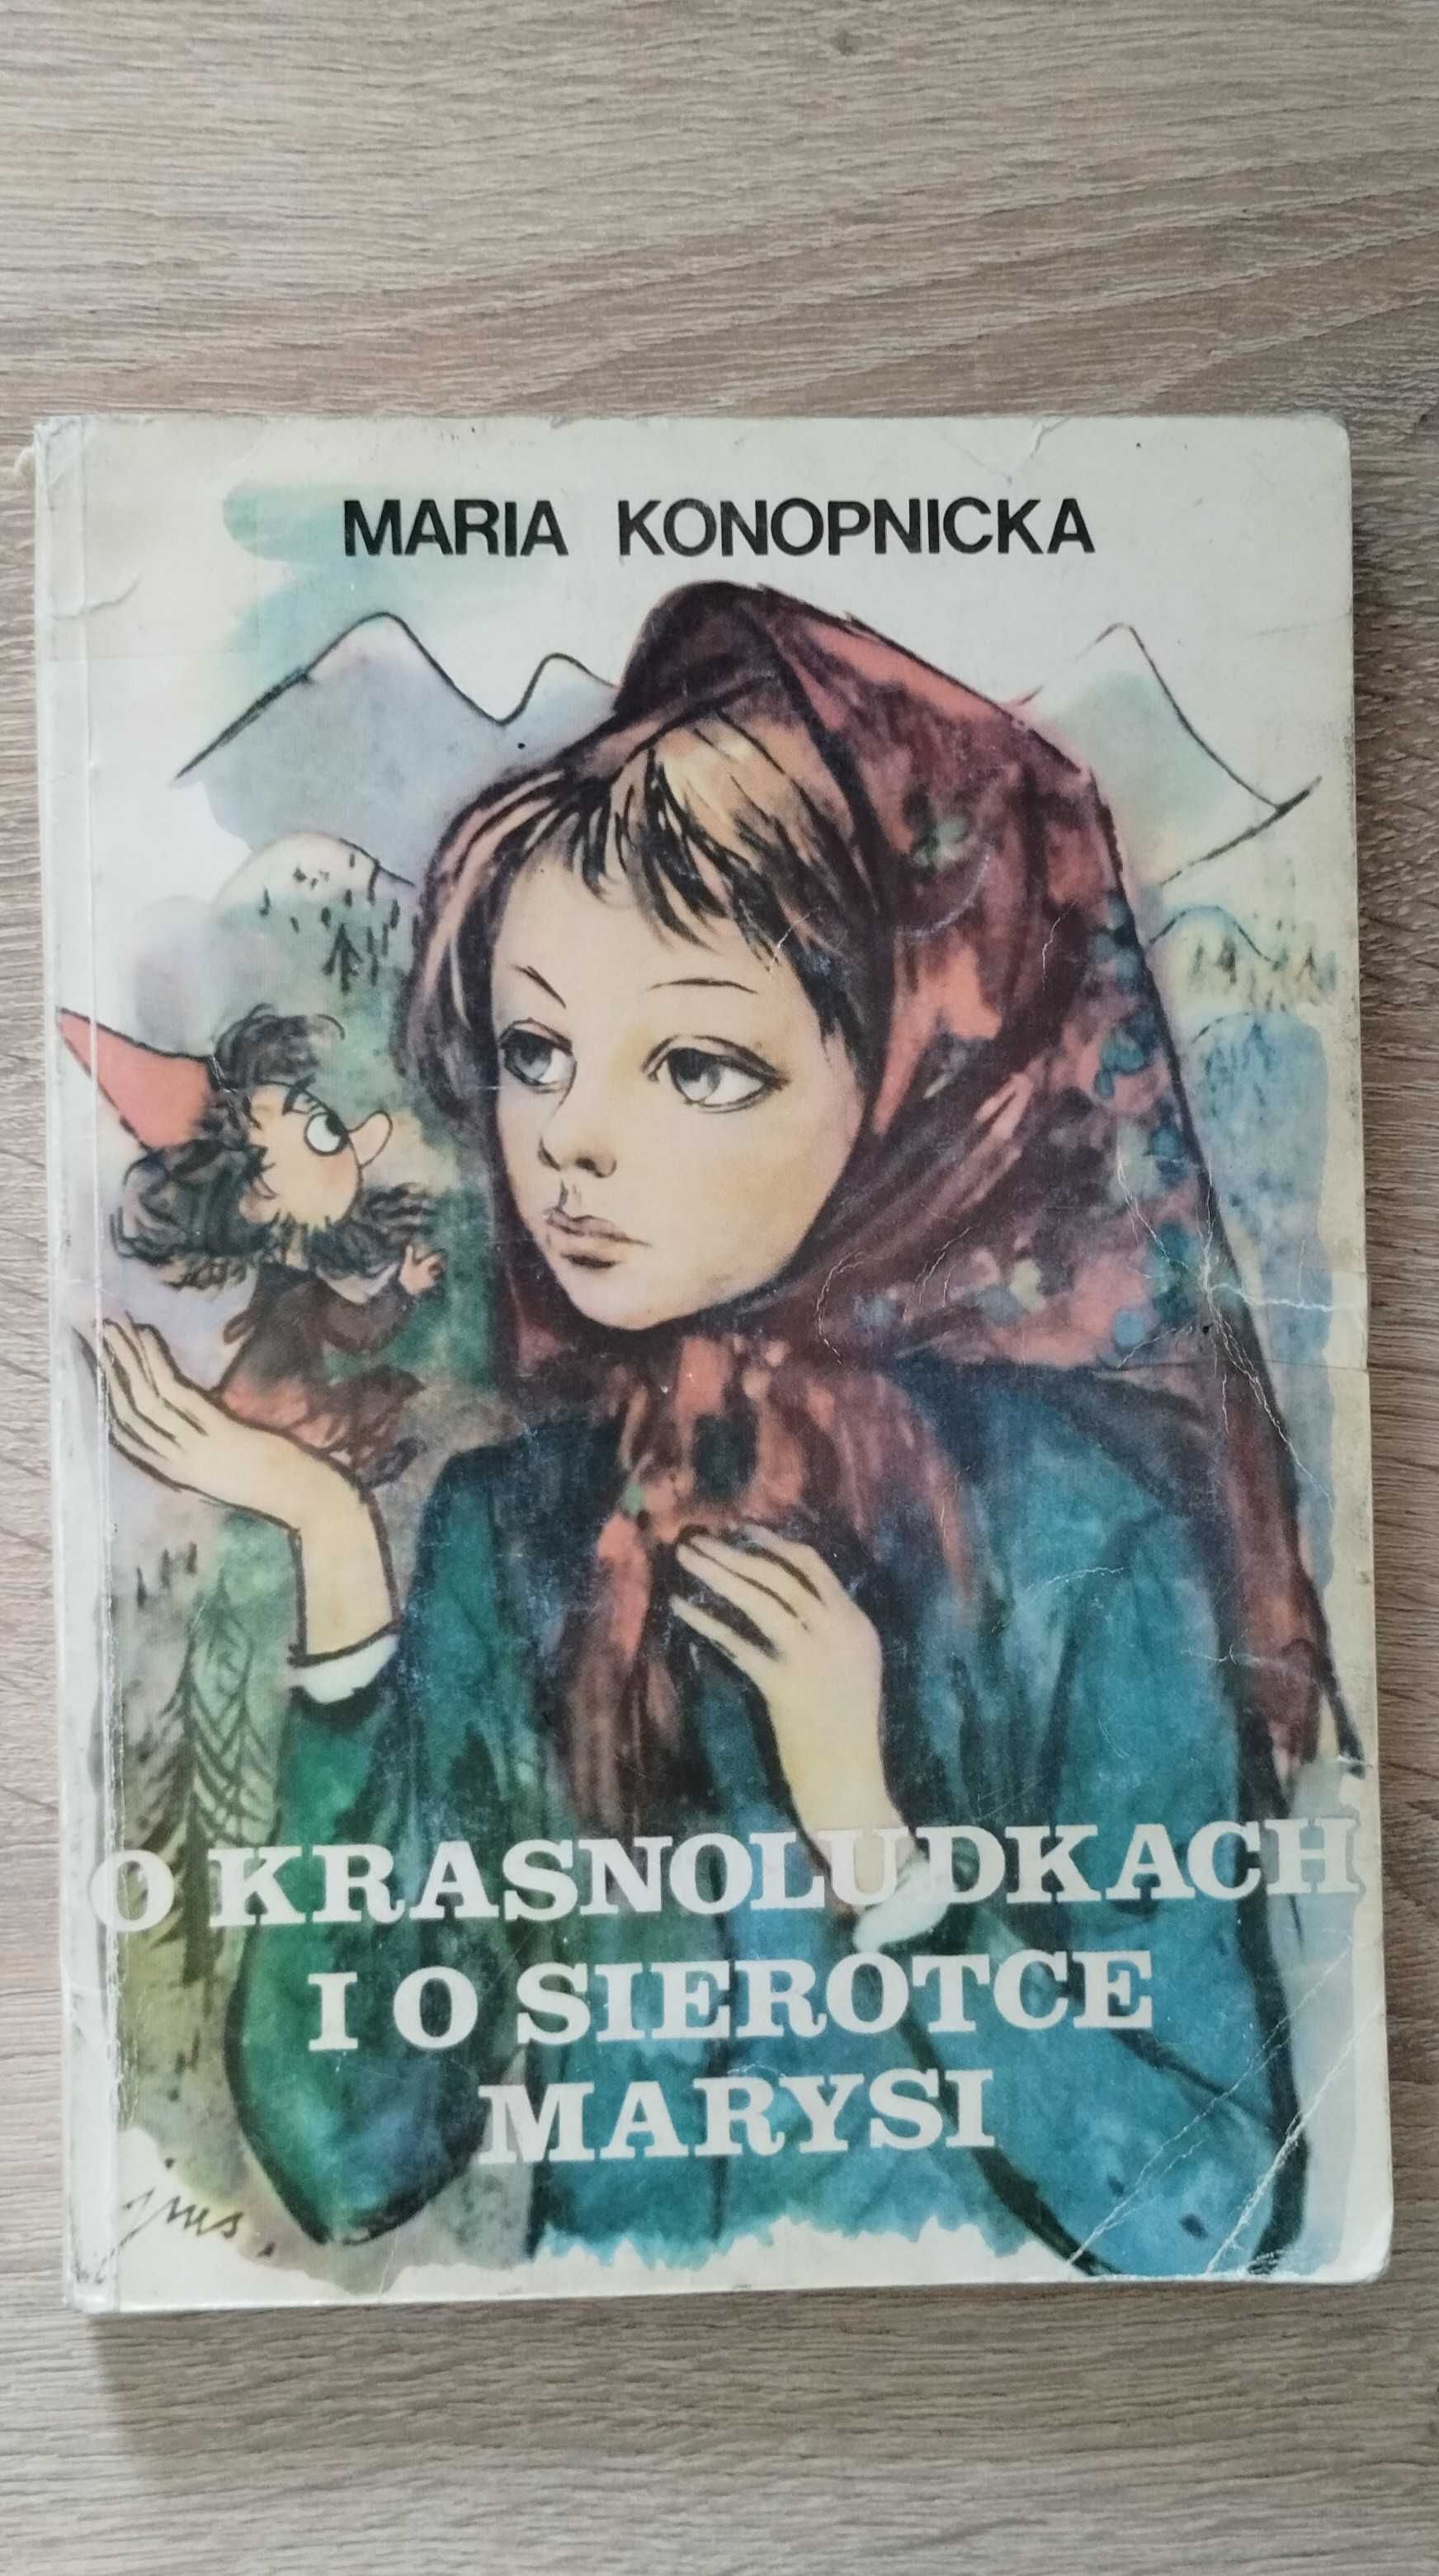 "O krasnoludkach i o Sierotce Marysi" Maria Konopnicka Szancer 1990